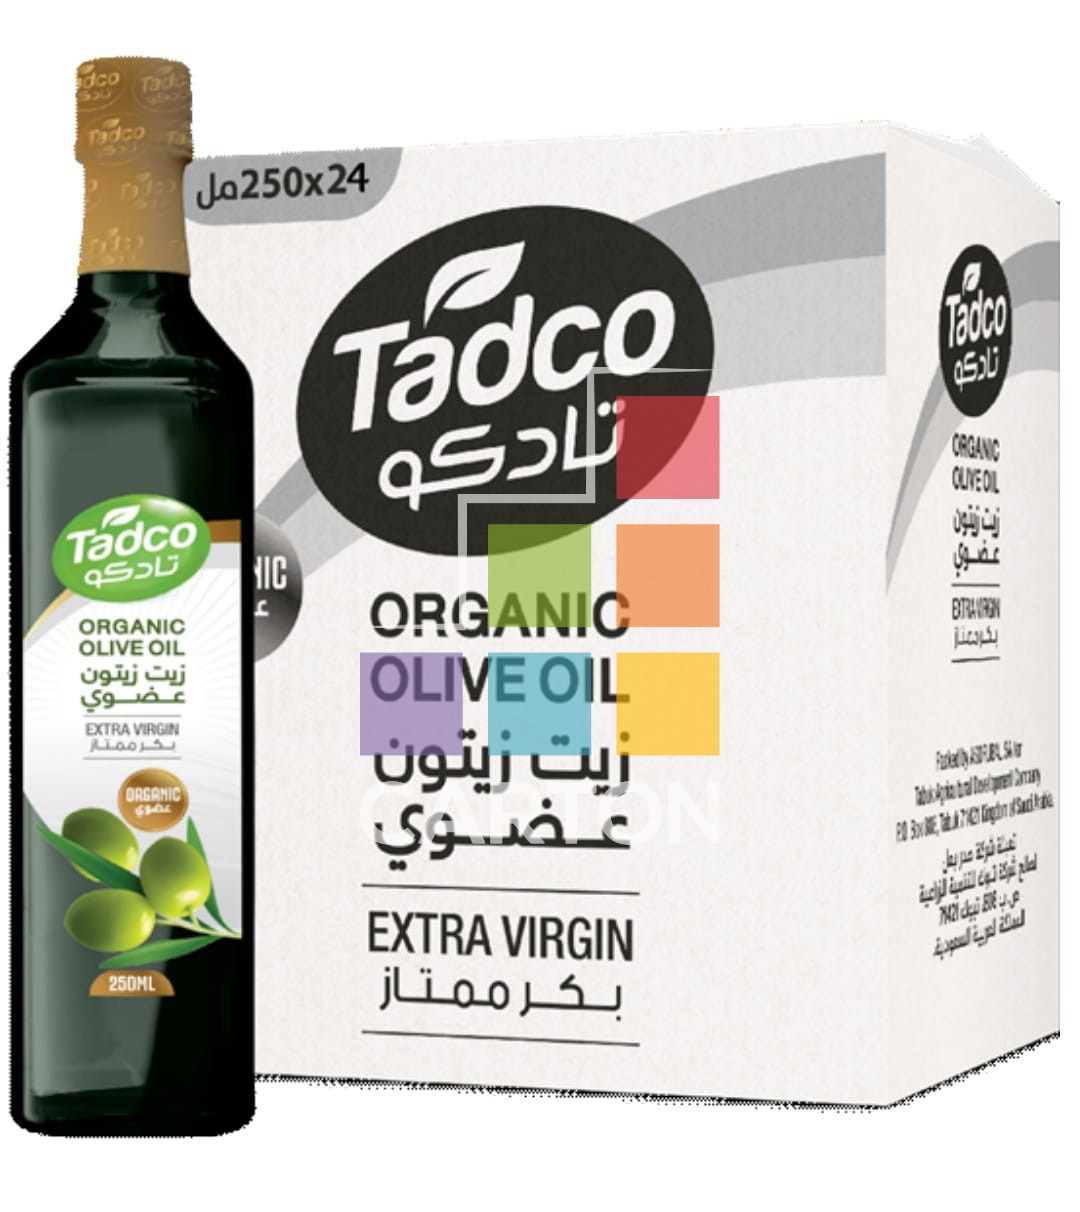 TADCO ORGANIC EXTRA VIRGIN OLIVE OIL 24*250ML